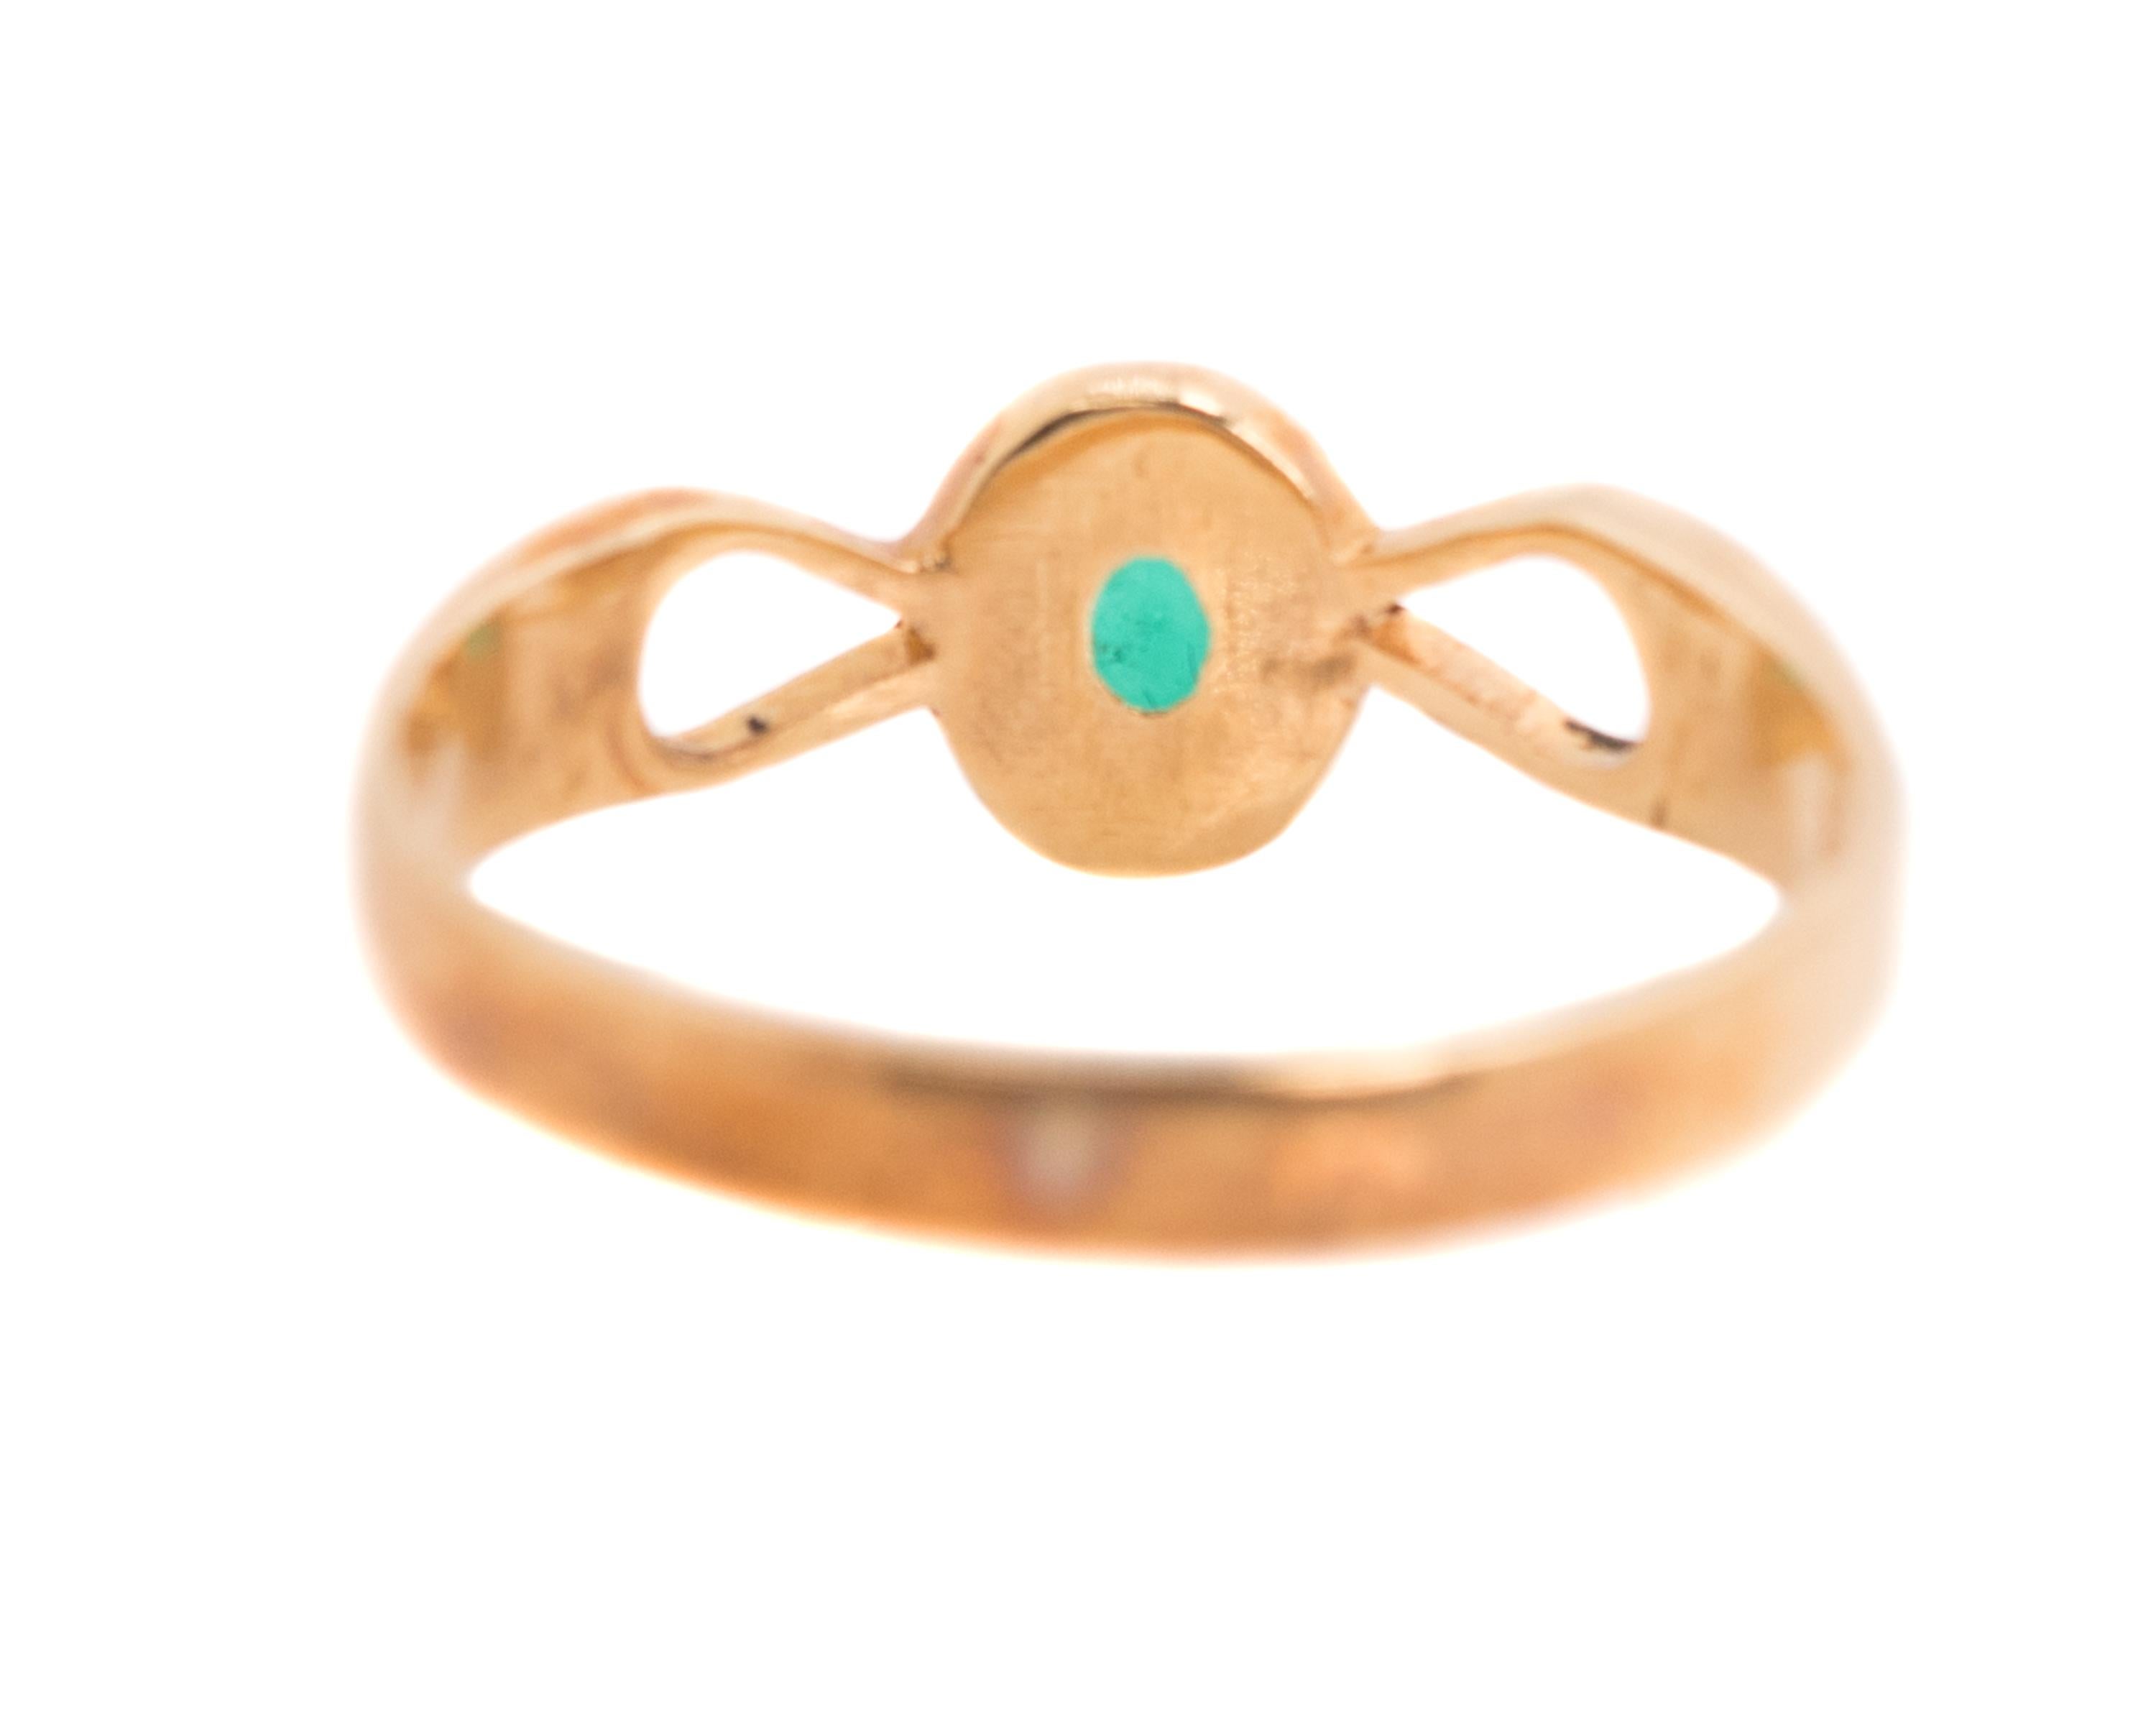 Retro 1950s 0.25 Carat Emerald and 18 Karat Yellow Gold Ring